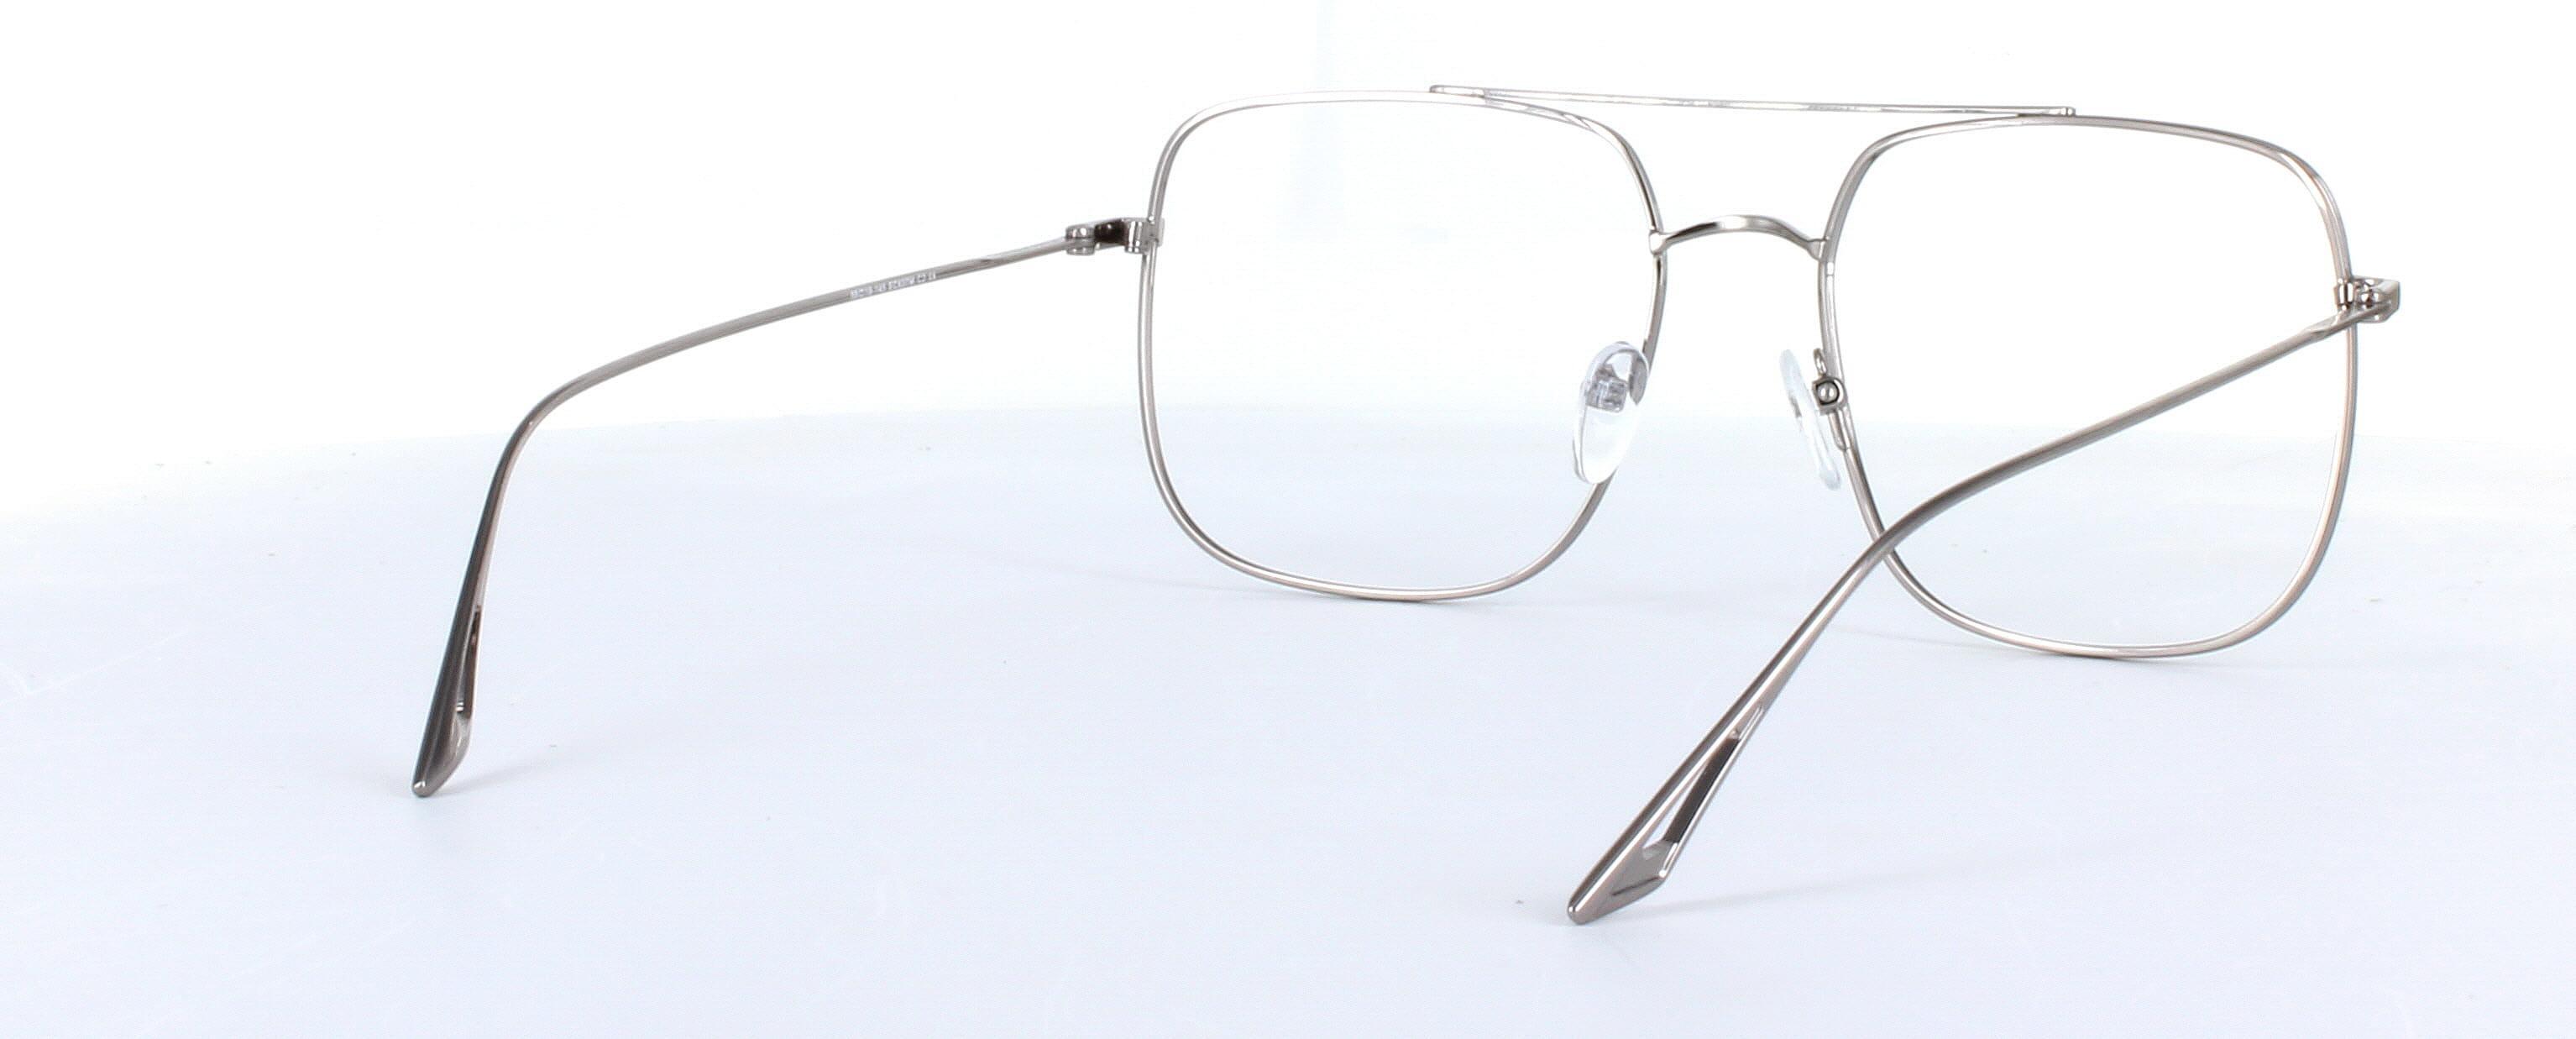 Eyecroxx 637-C1 Black Full Rim Aviator Metal Glasses - Image View 4